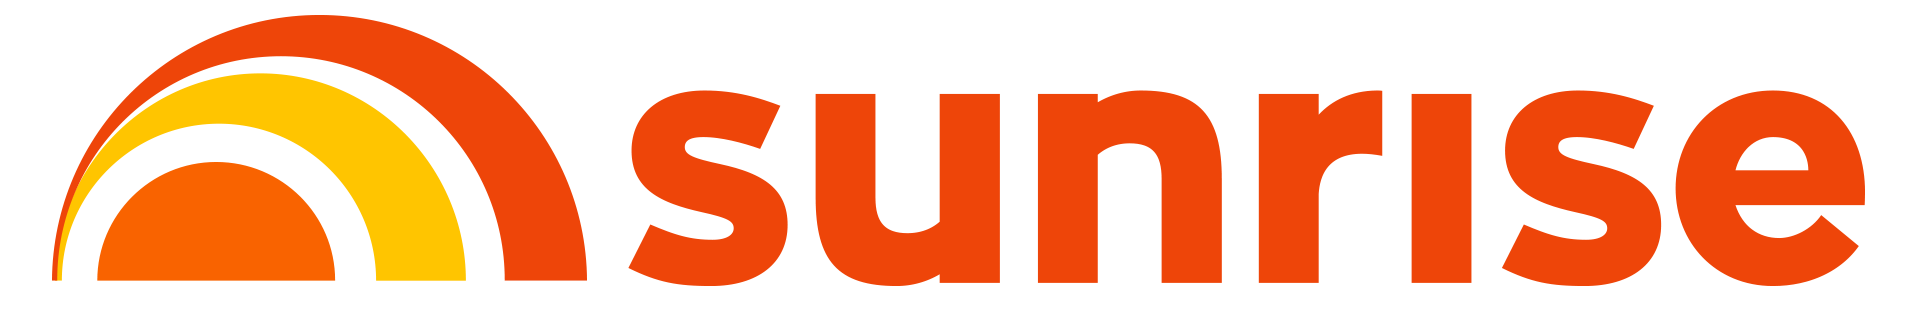 Sunrise TV logo